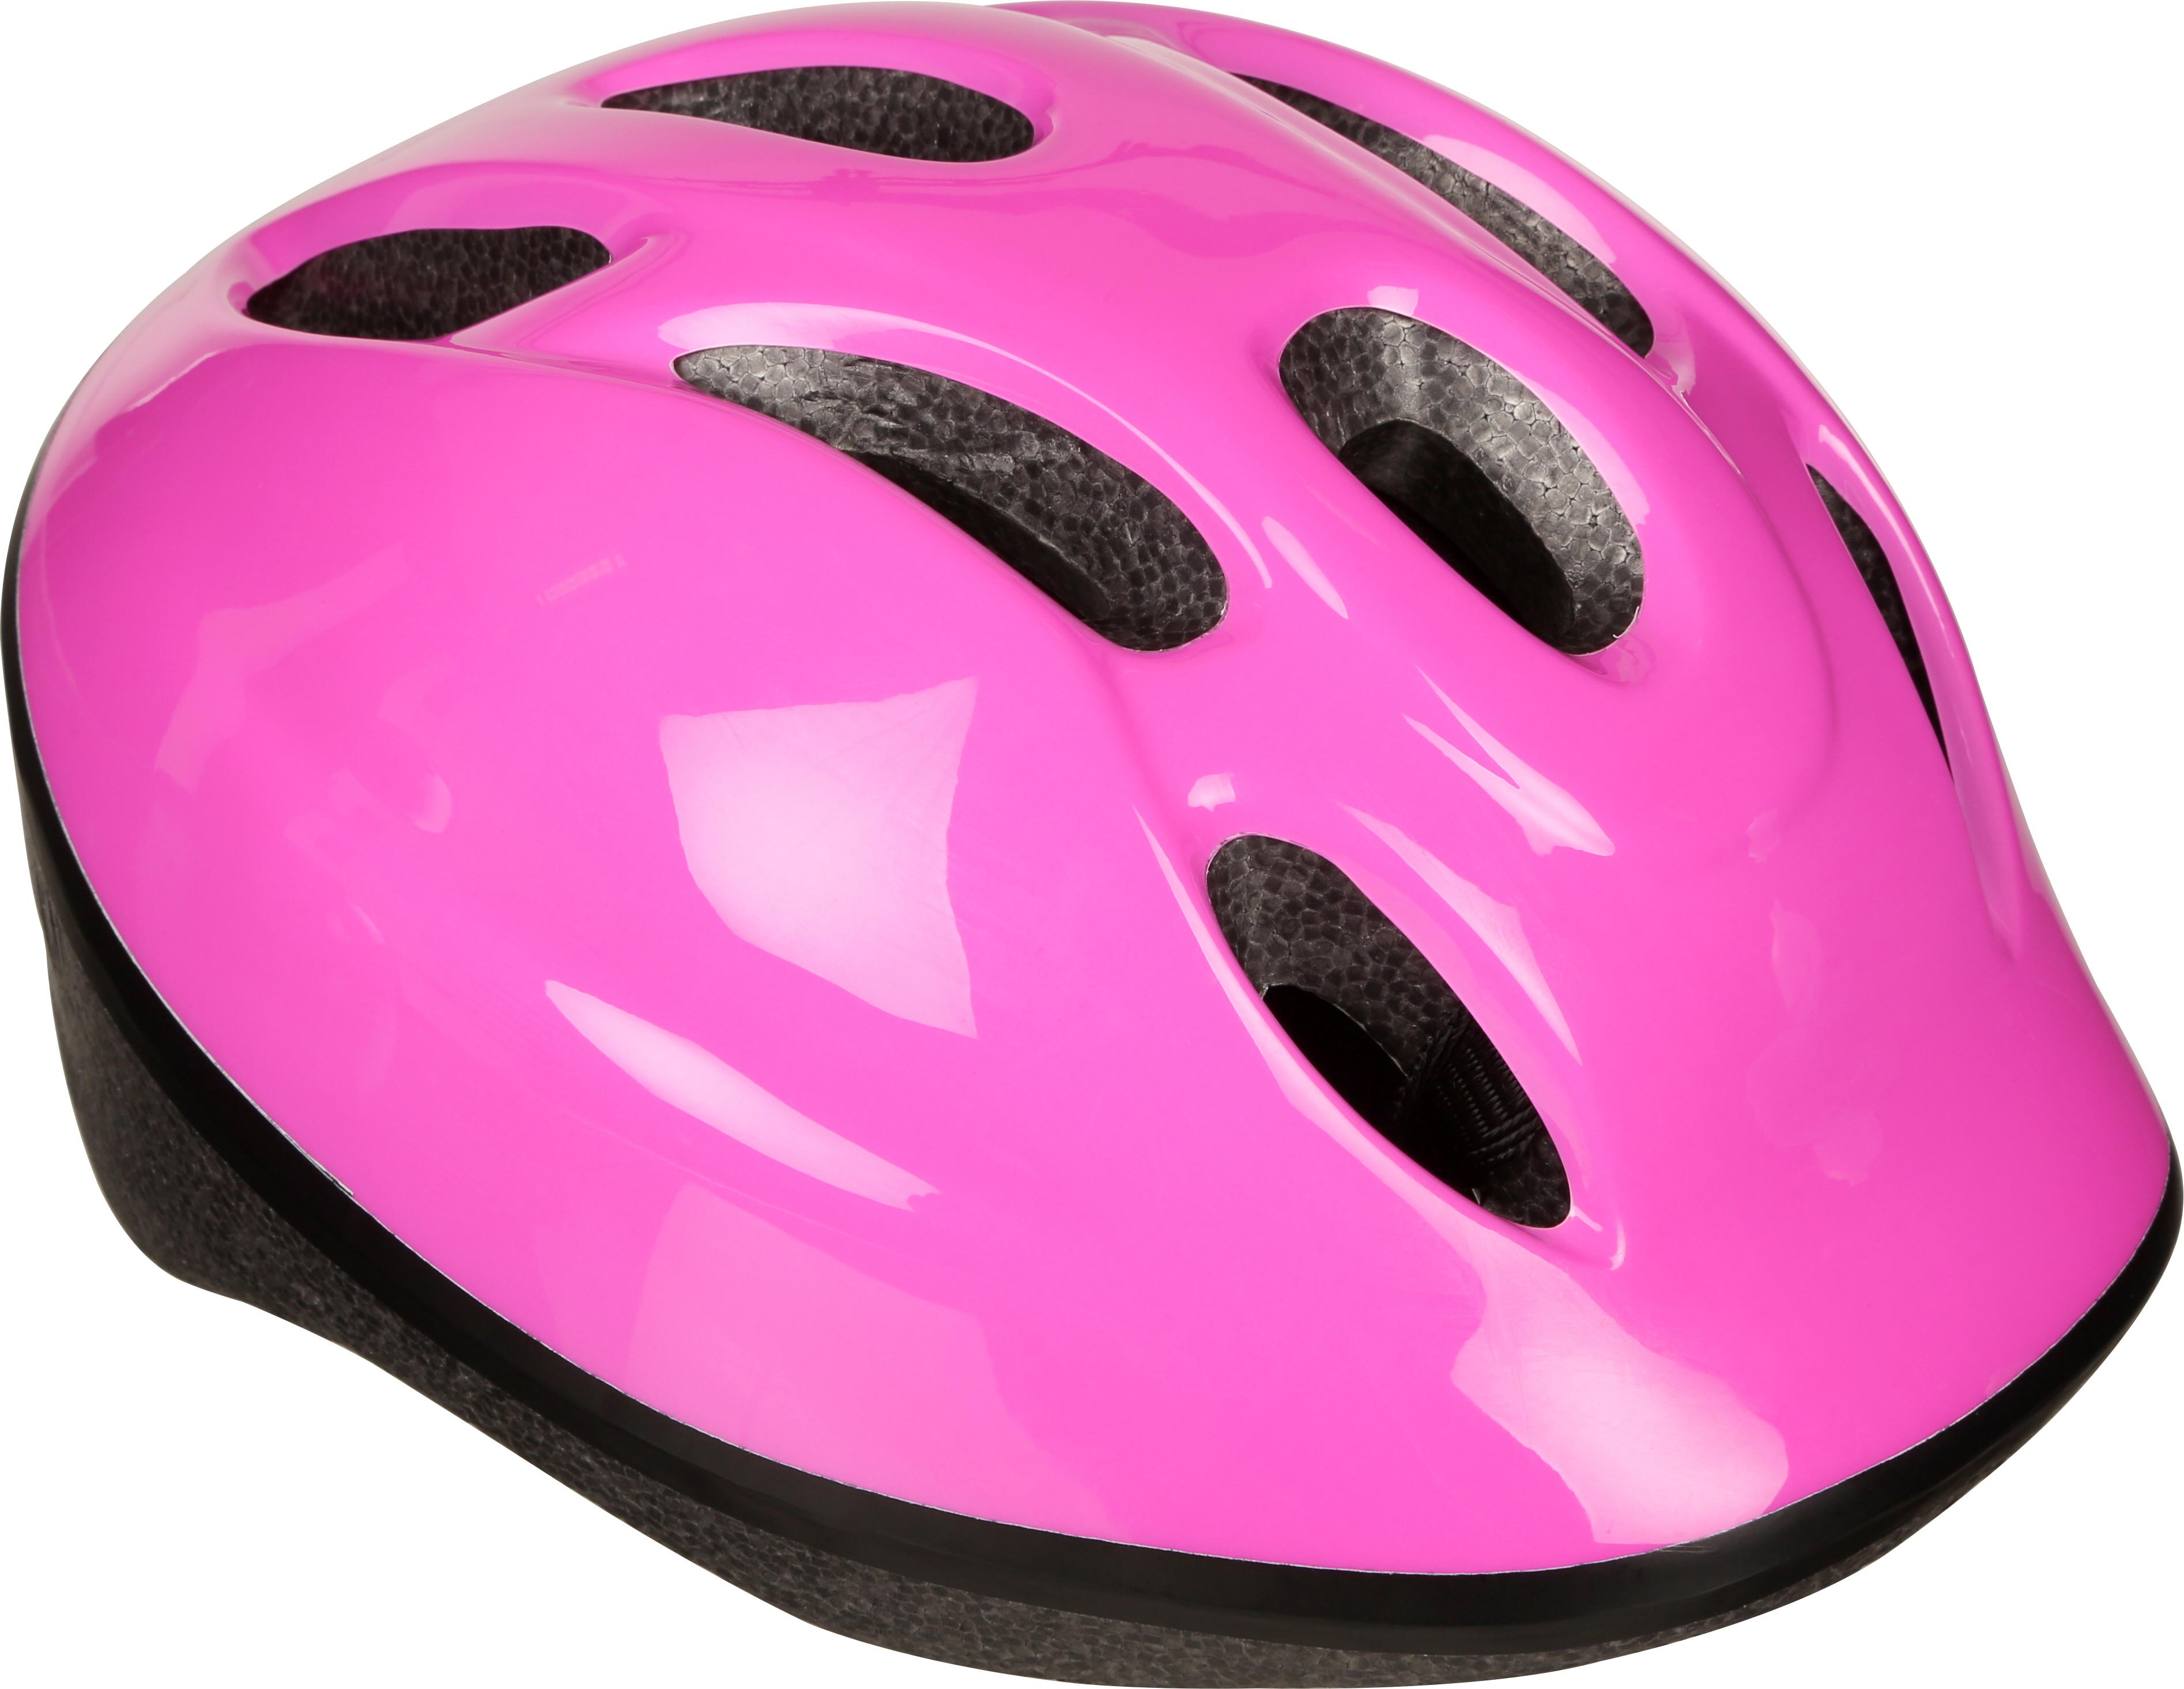 Kids Bike Helmet - Pink (48-54Cm)